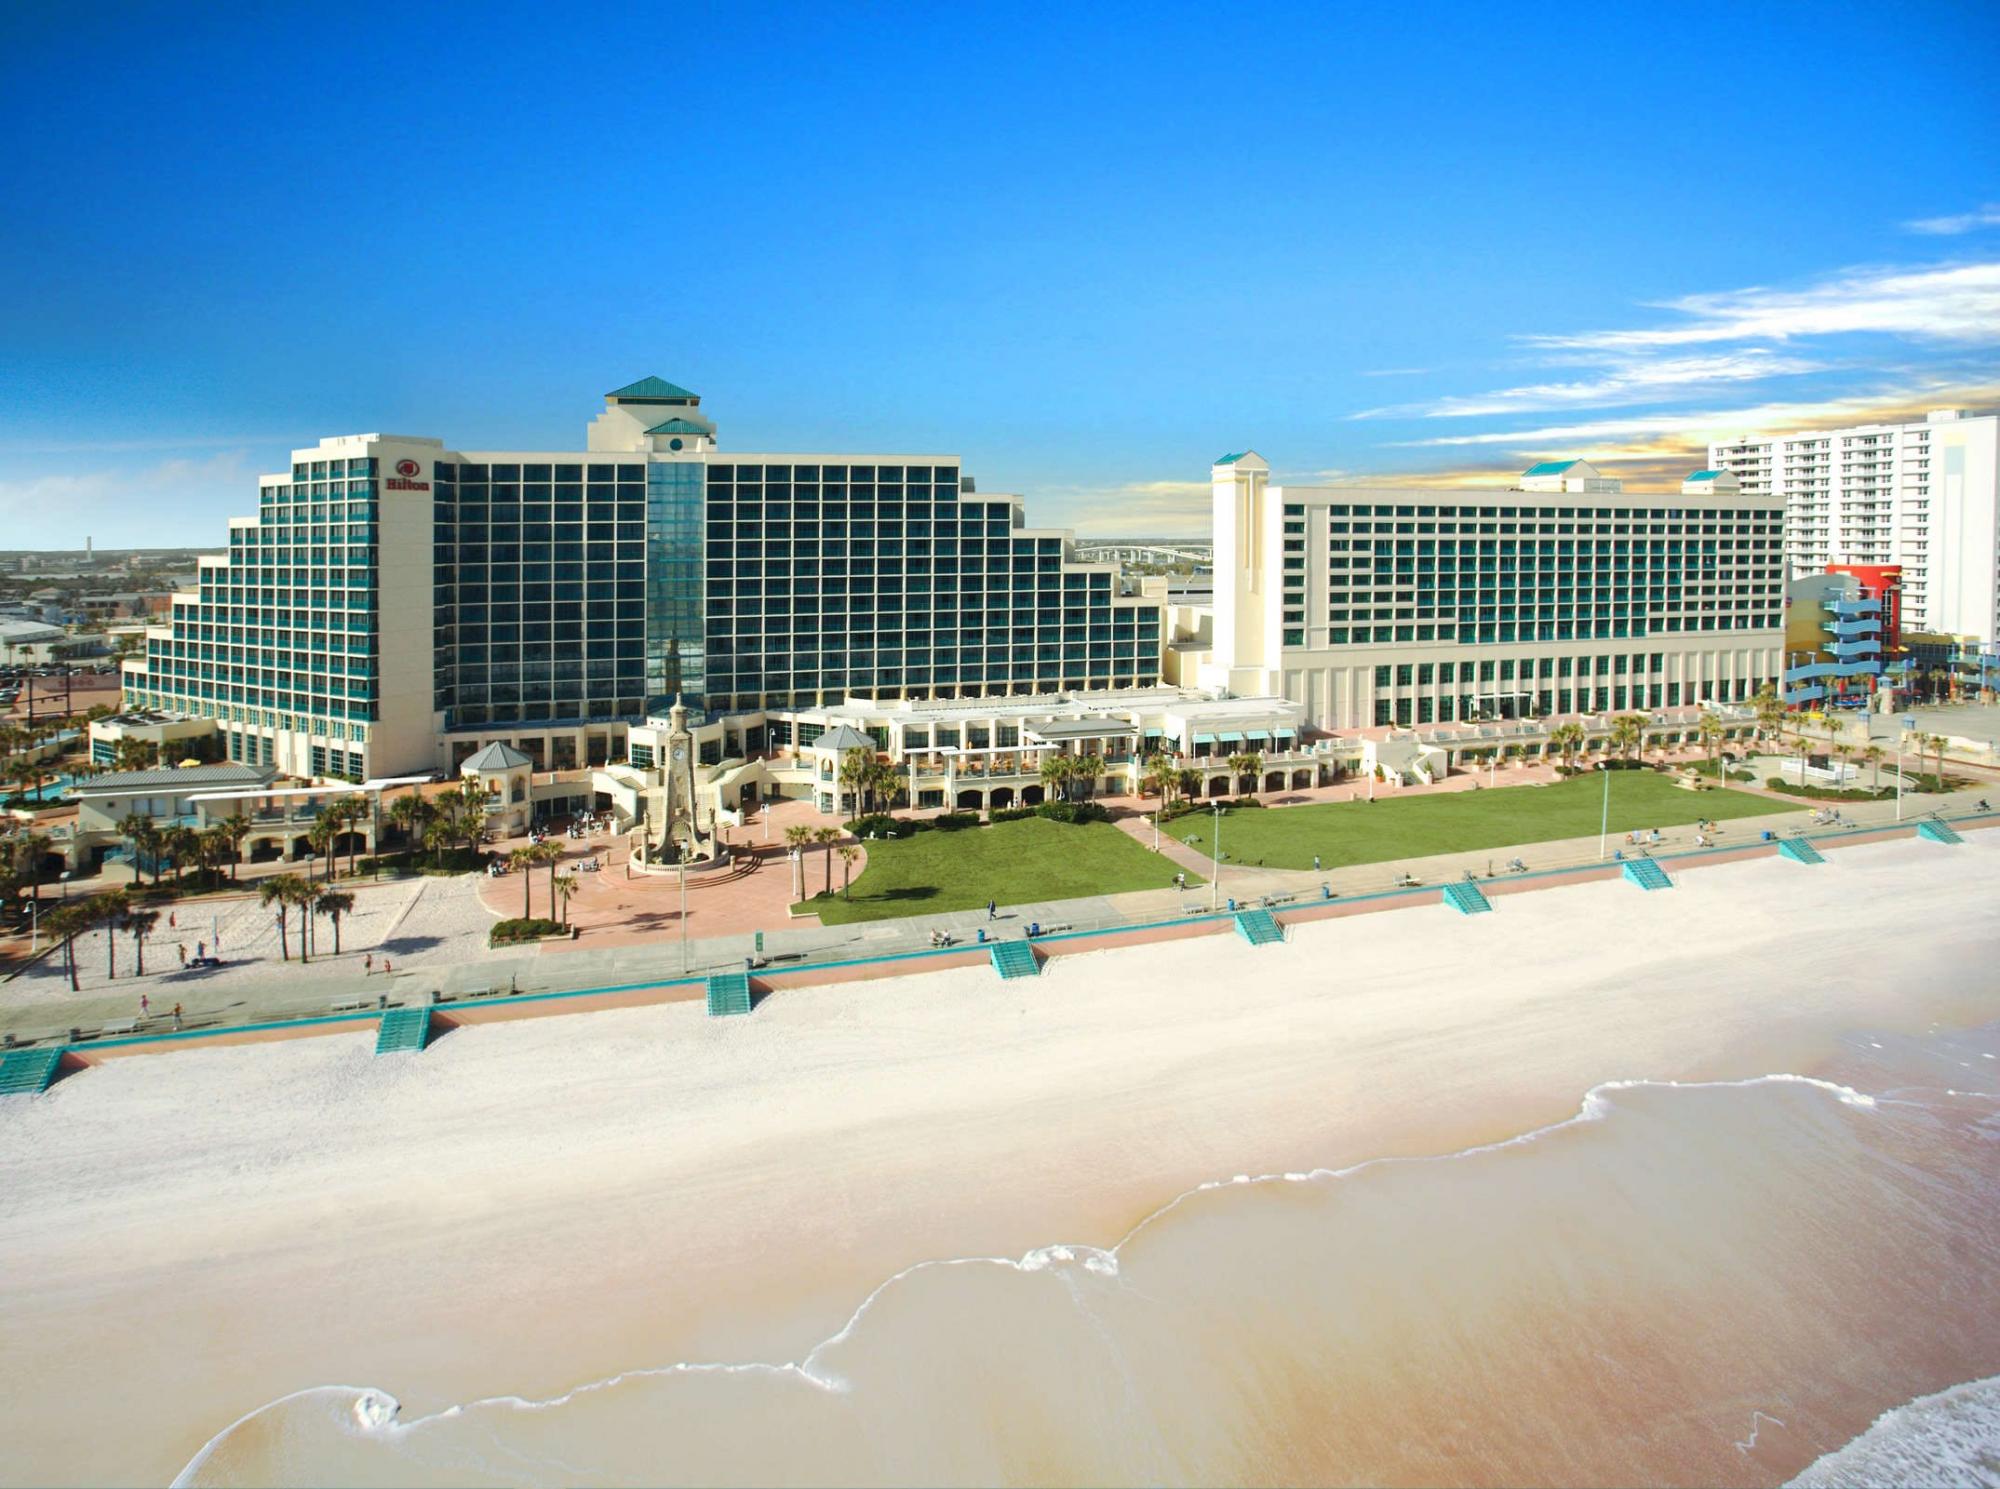 Hilton Daytona Beach Oceanfront Resort, book your golf getaway in Florida